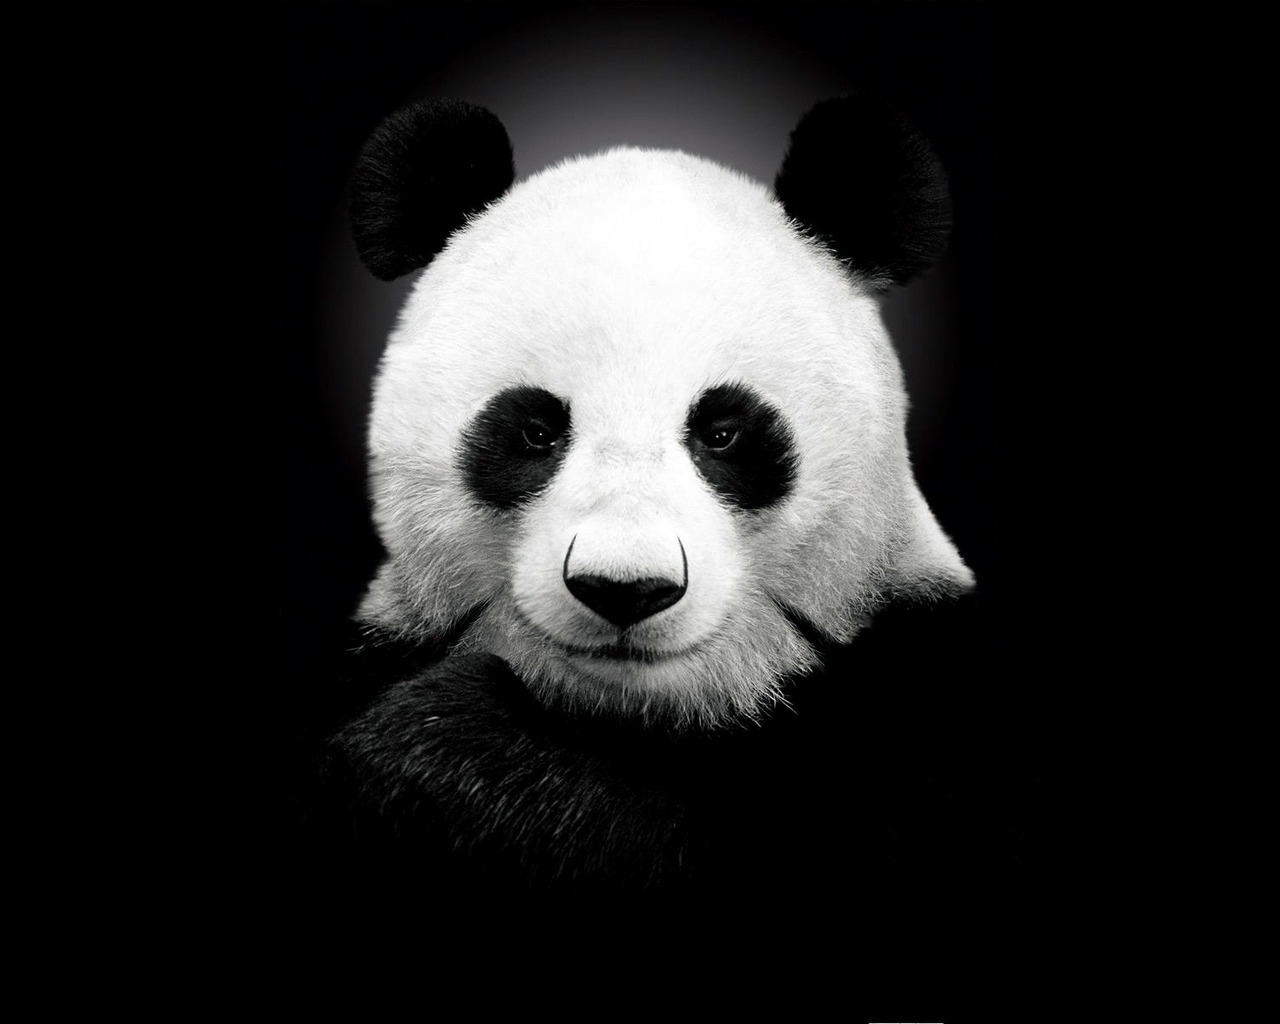 Panda Bear for 1280 x 1024 resolution